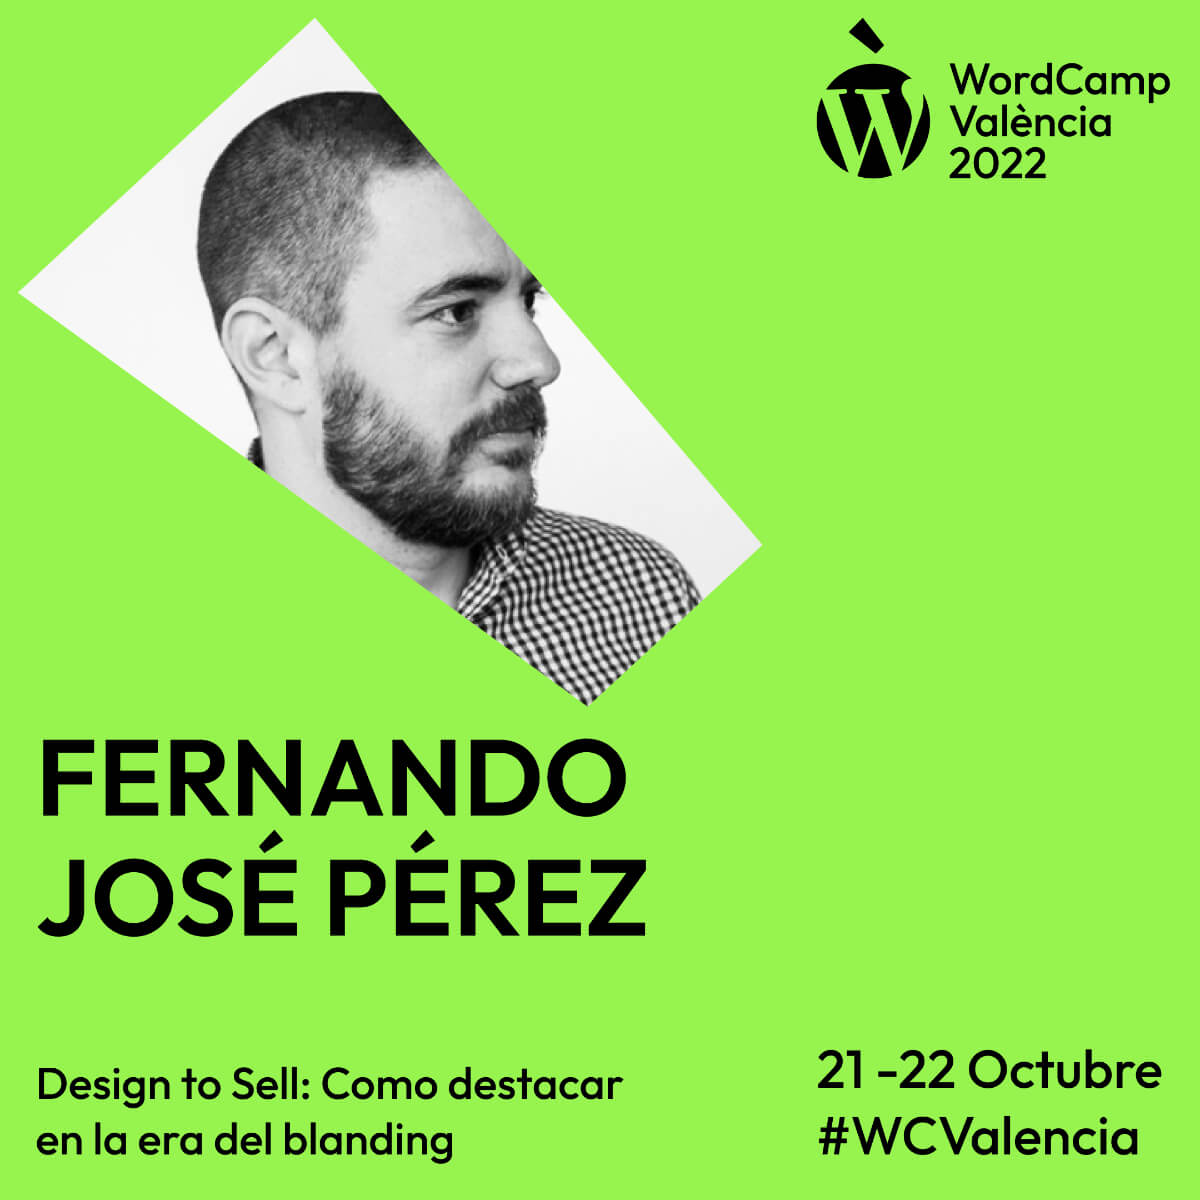 Fernando José Pérez WCVLC 2022